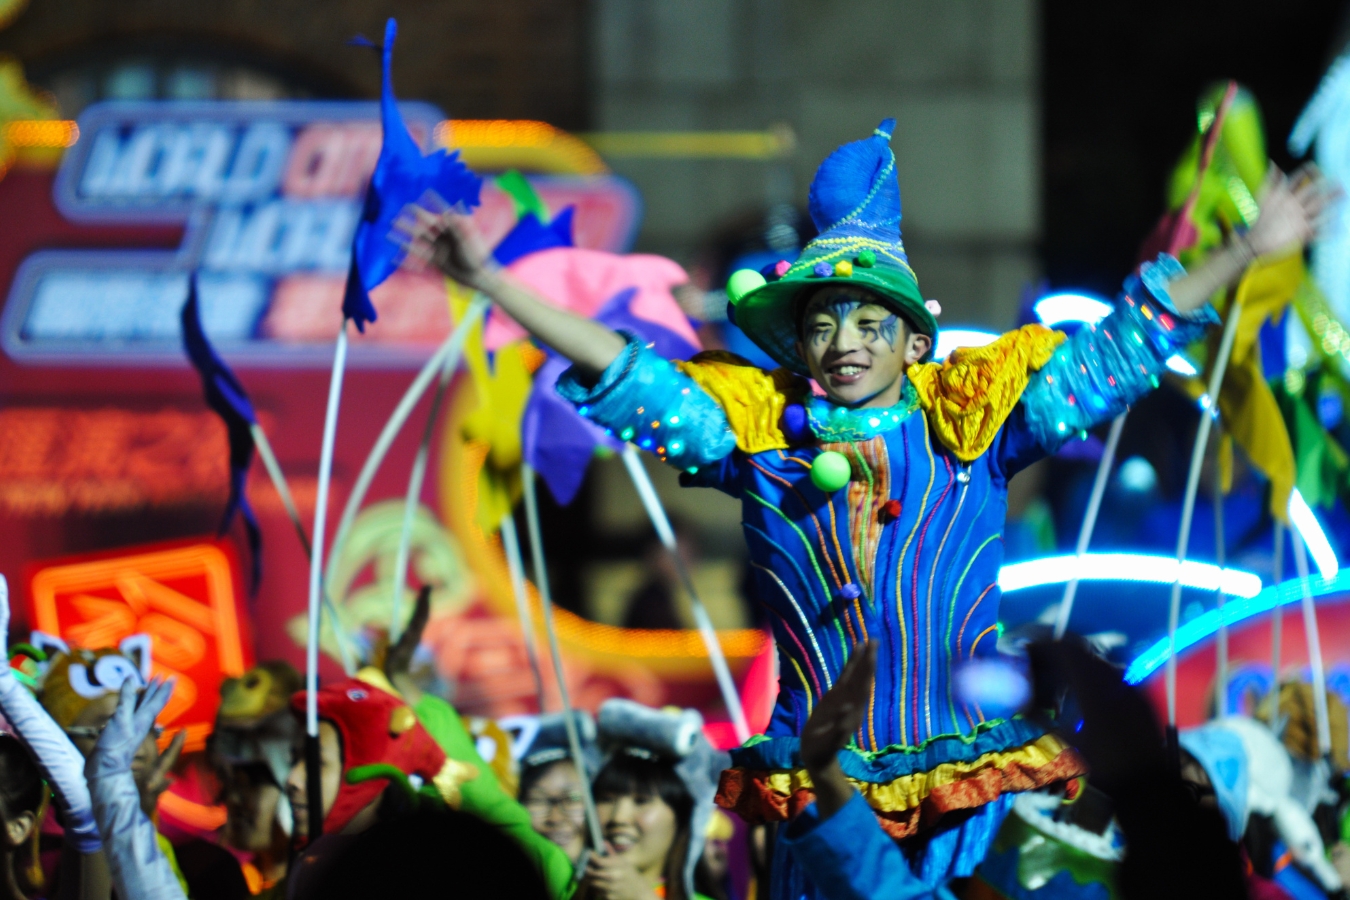 street performers international chinese night parade and float display hong kong